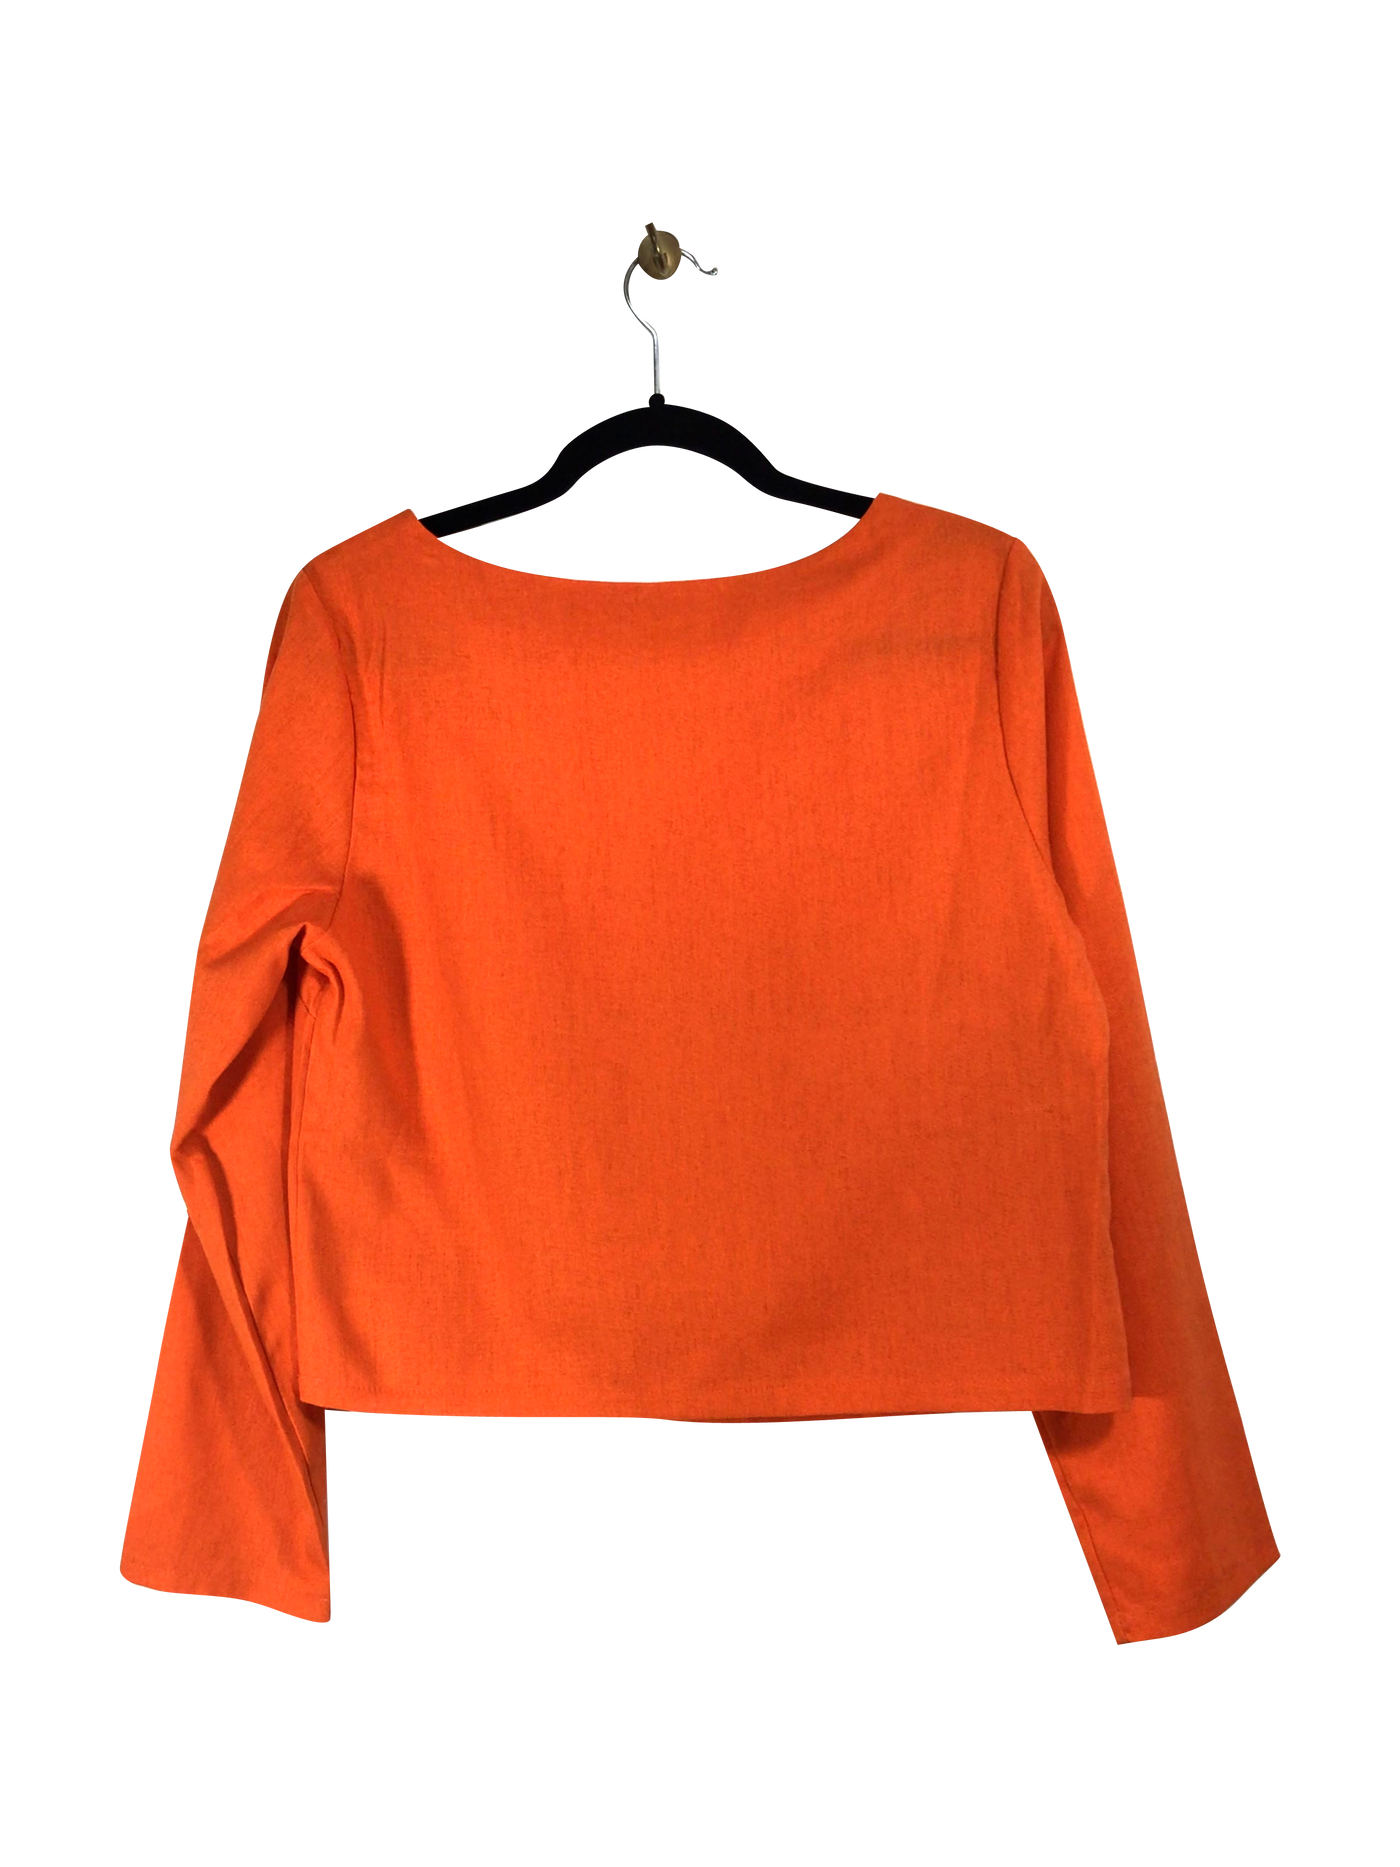 UNBRANDED Women Blouses Regular fit in Orange - Size M | 12 $ KOOP